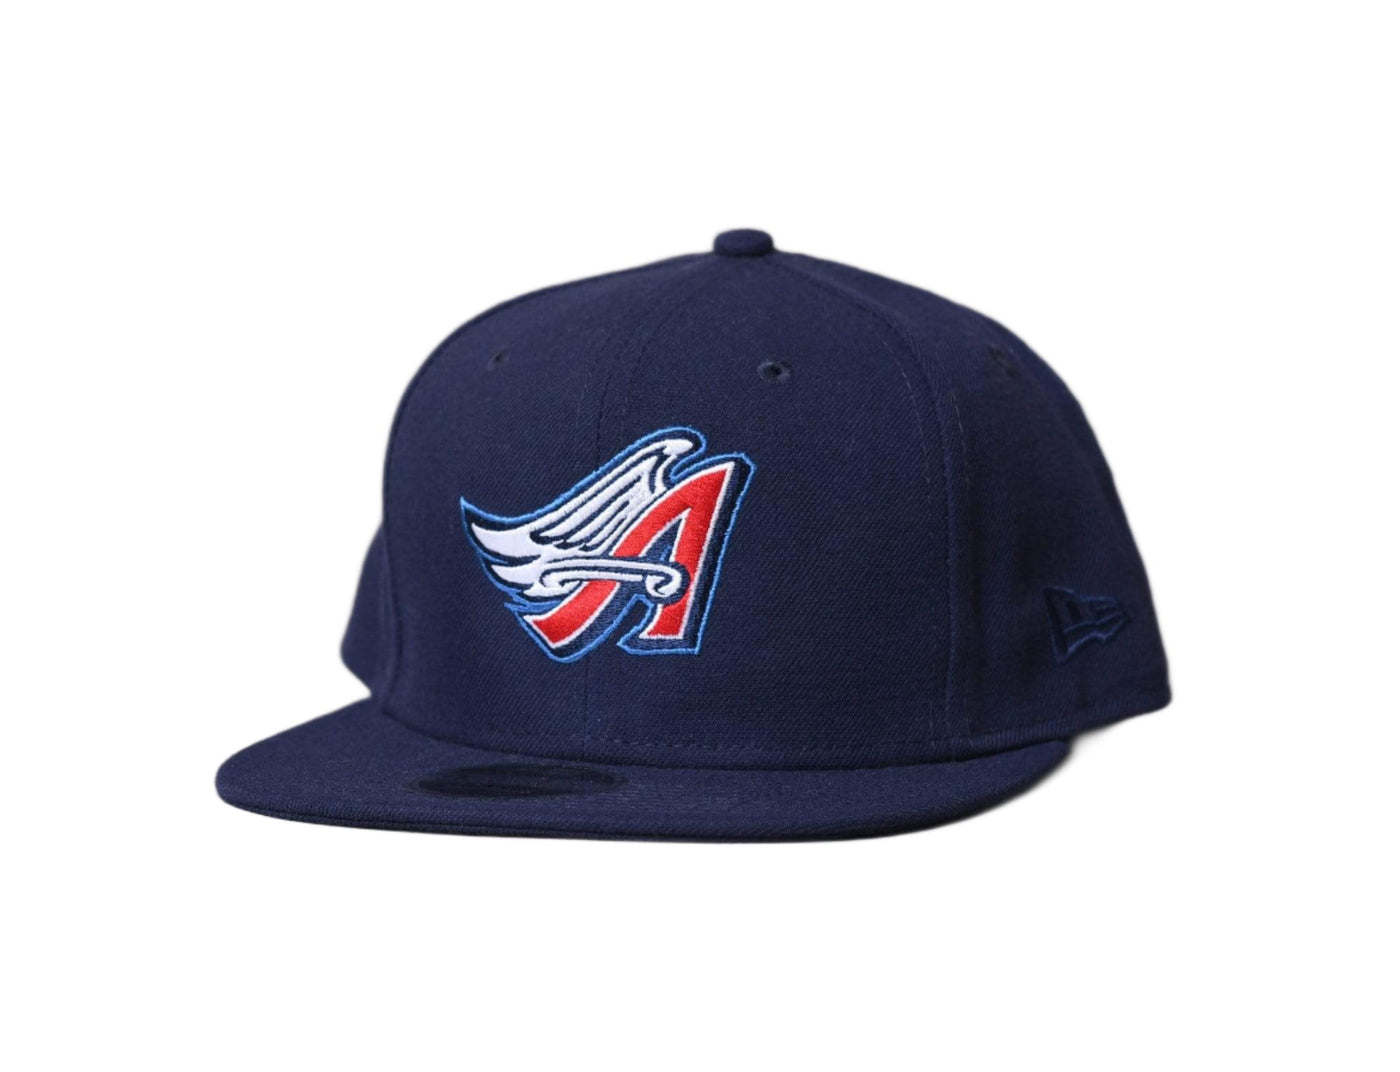 Cap Snapback 9FIFTY MLB Coast To Coast Anaheim Angels New Era